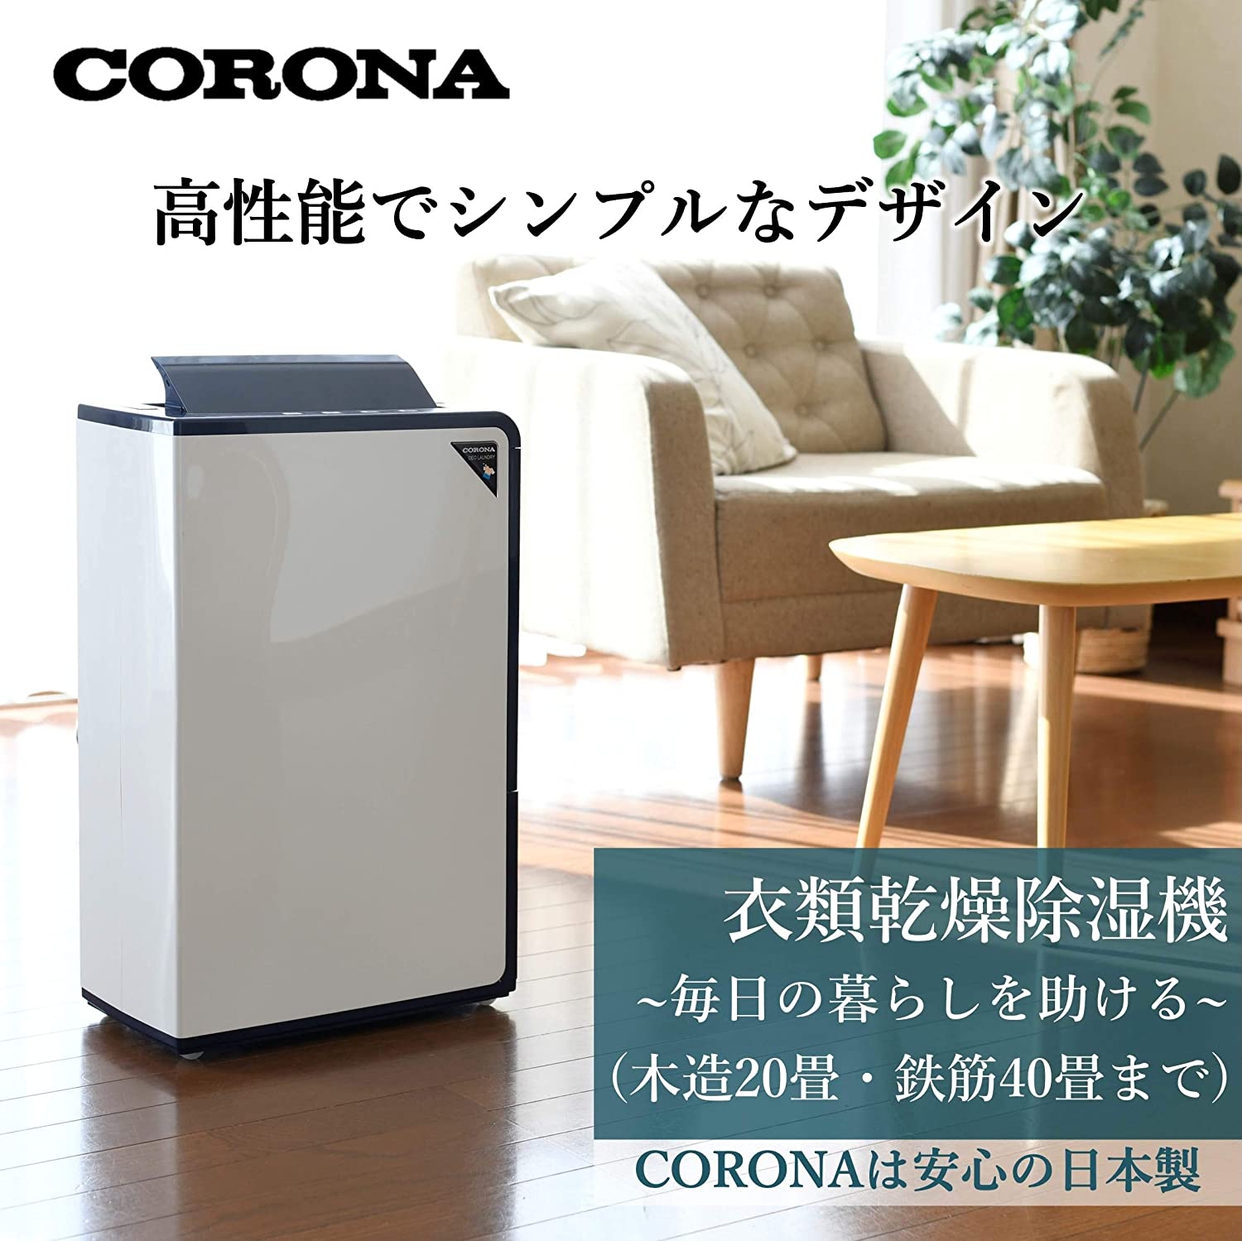 CORONA(コロナ) 衣類乾燥除湿機 CD-H1818の商品画像サムネ2 